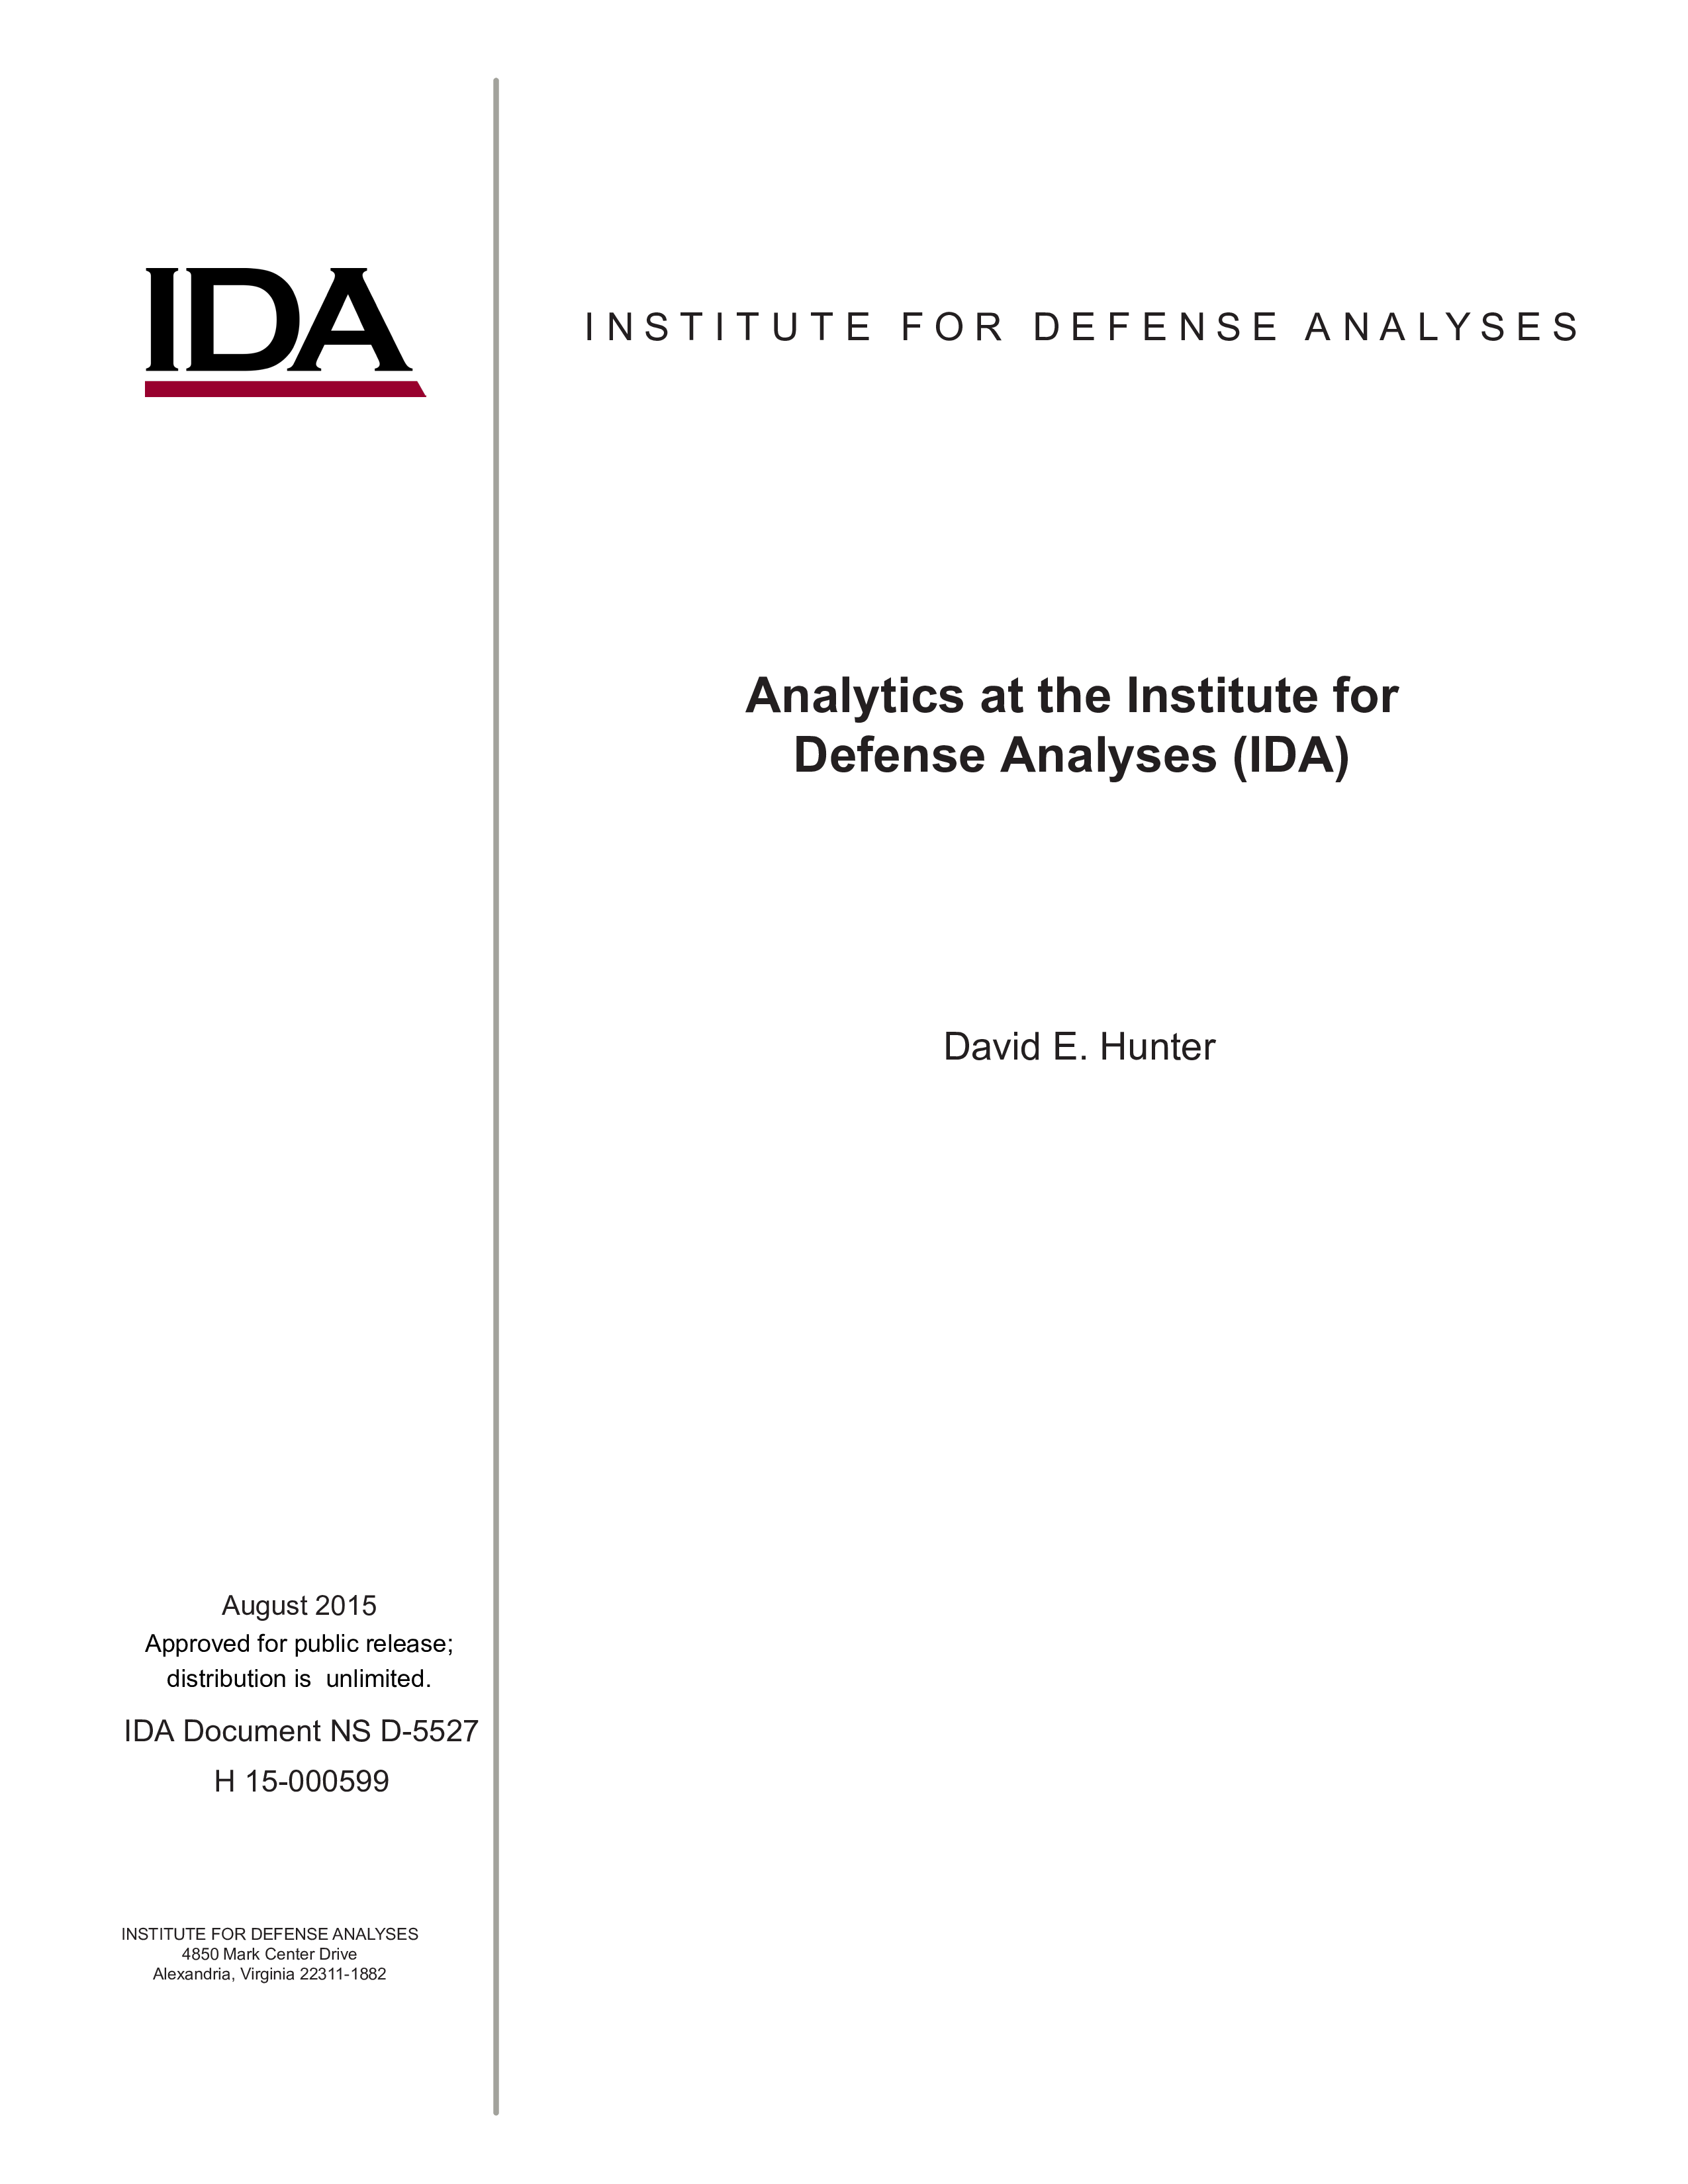 Institute for Defense Analyses